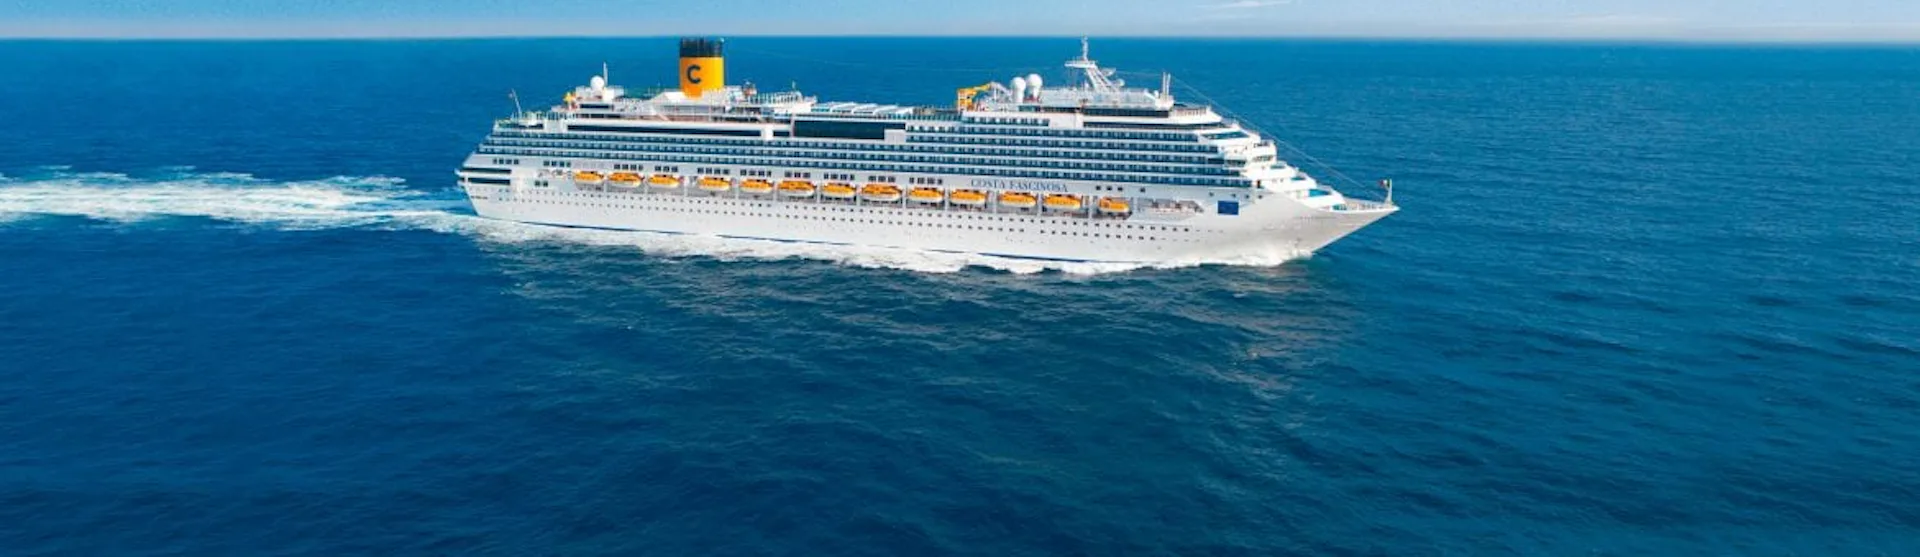 Costa Fascinosa - Costa Cruises